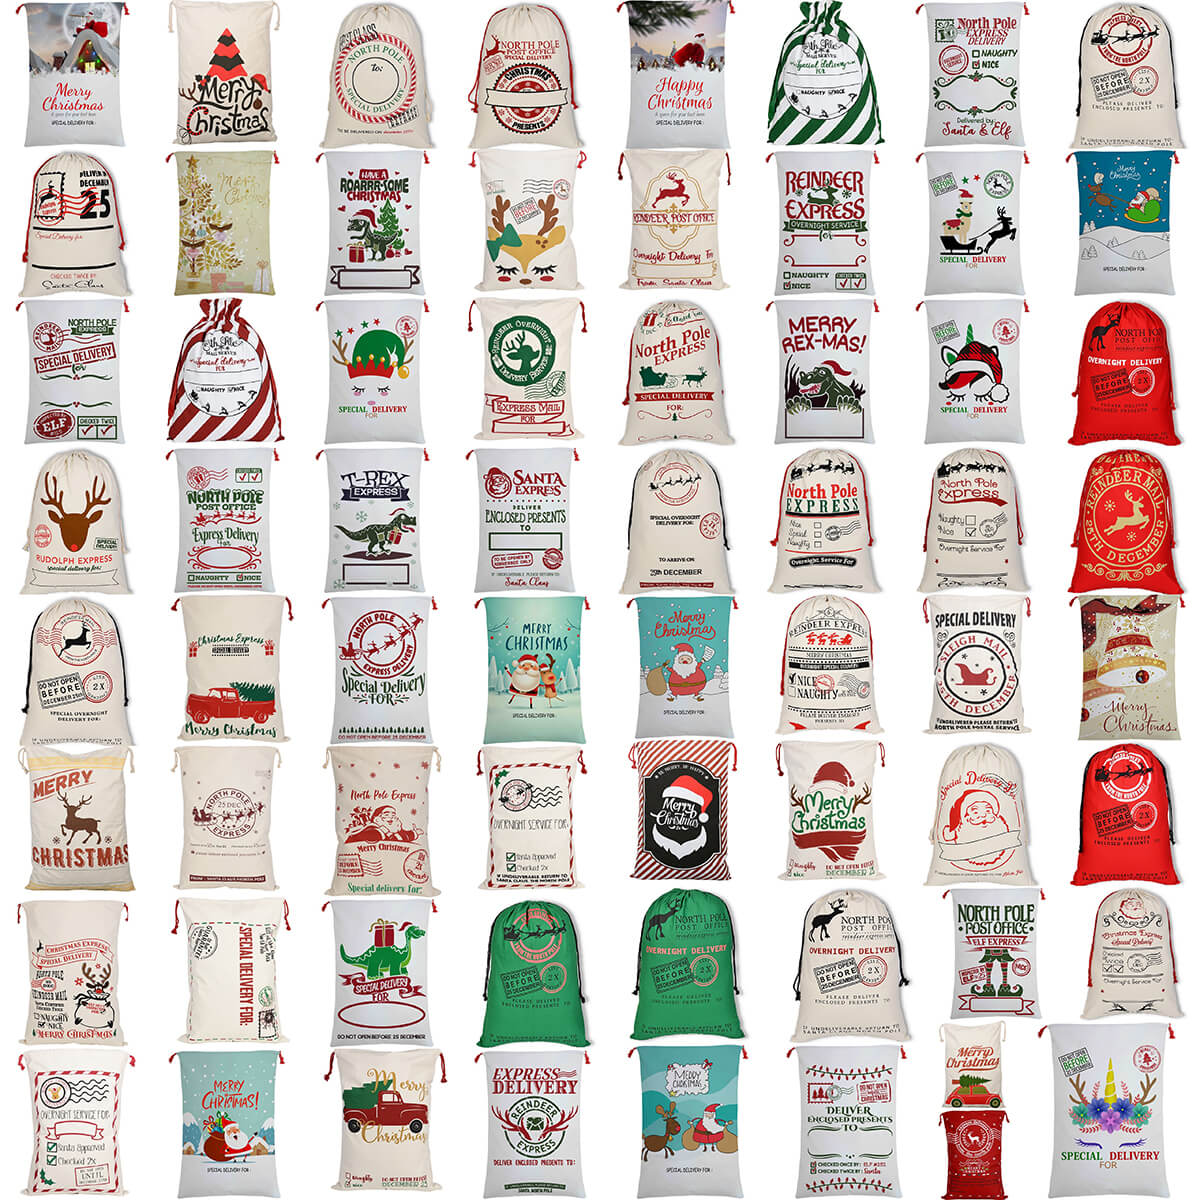 Large Christmas XMAS Hessian Santa Sack Stocking Bag Reindeer Children Gifts Bag, Cream - Reindeer Express (B) - SILBERSHELL